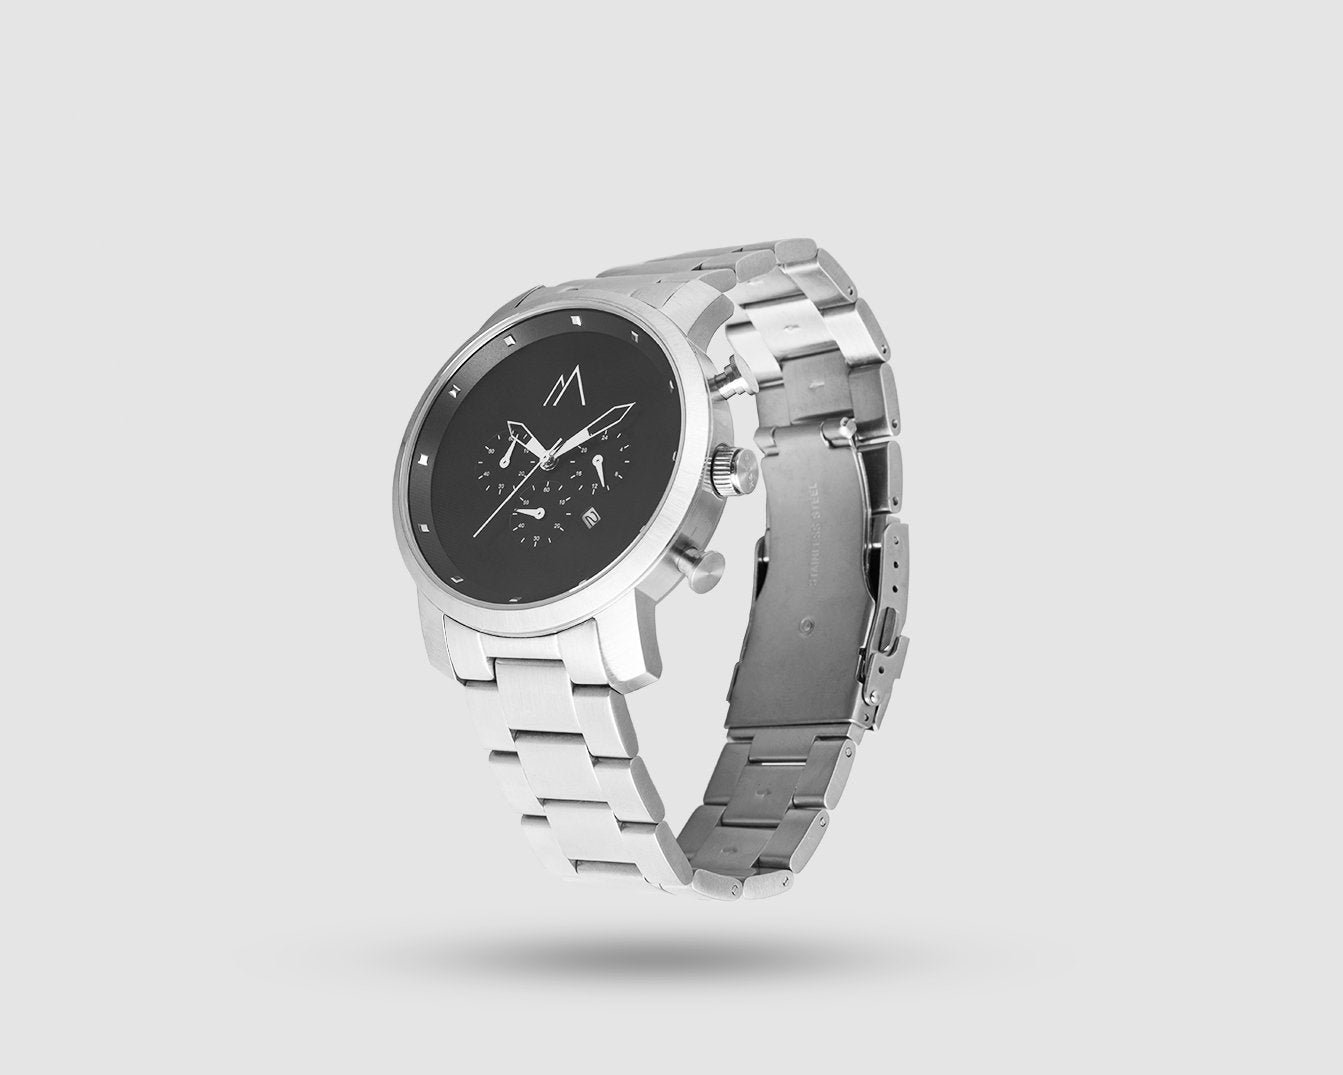 Pompeak watches debut collection page header. British designed chronograph quartz mens watch